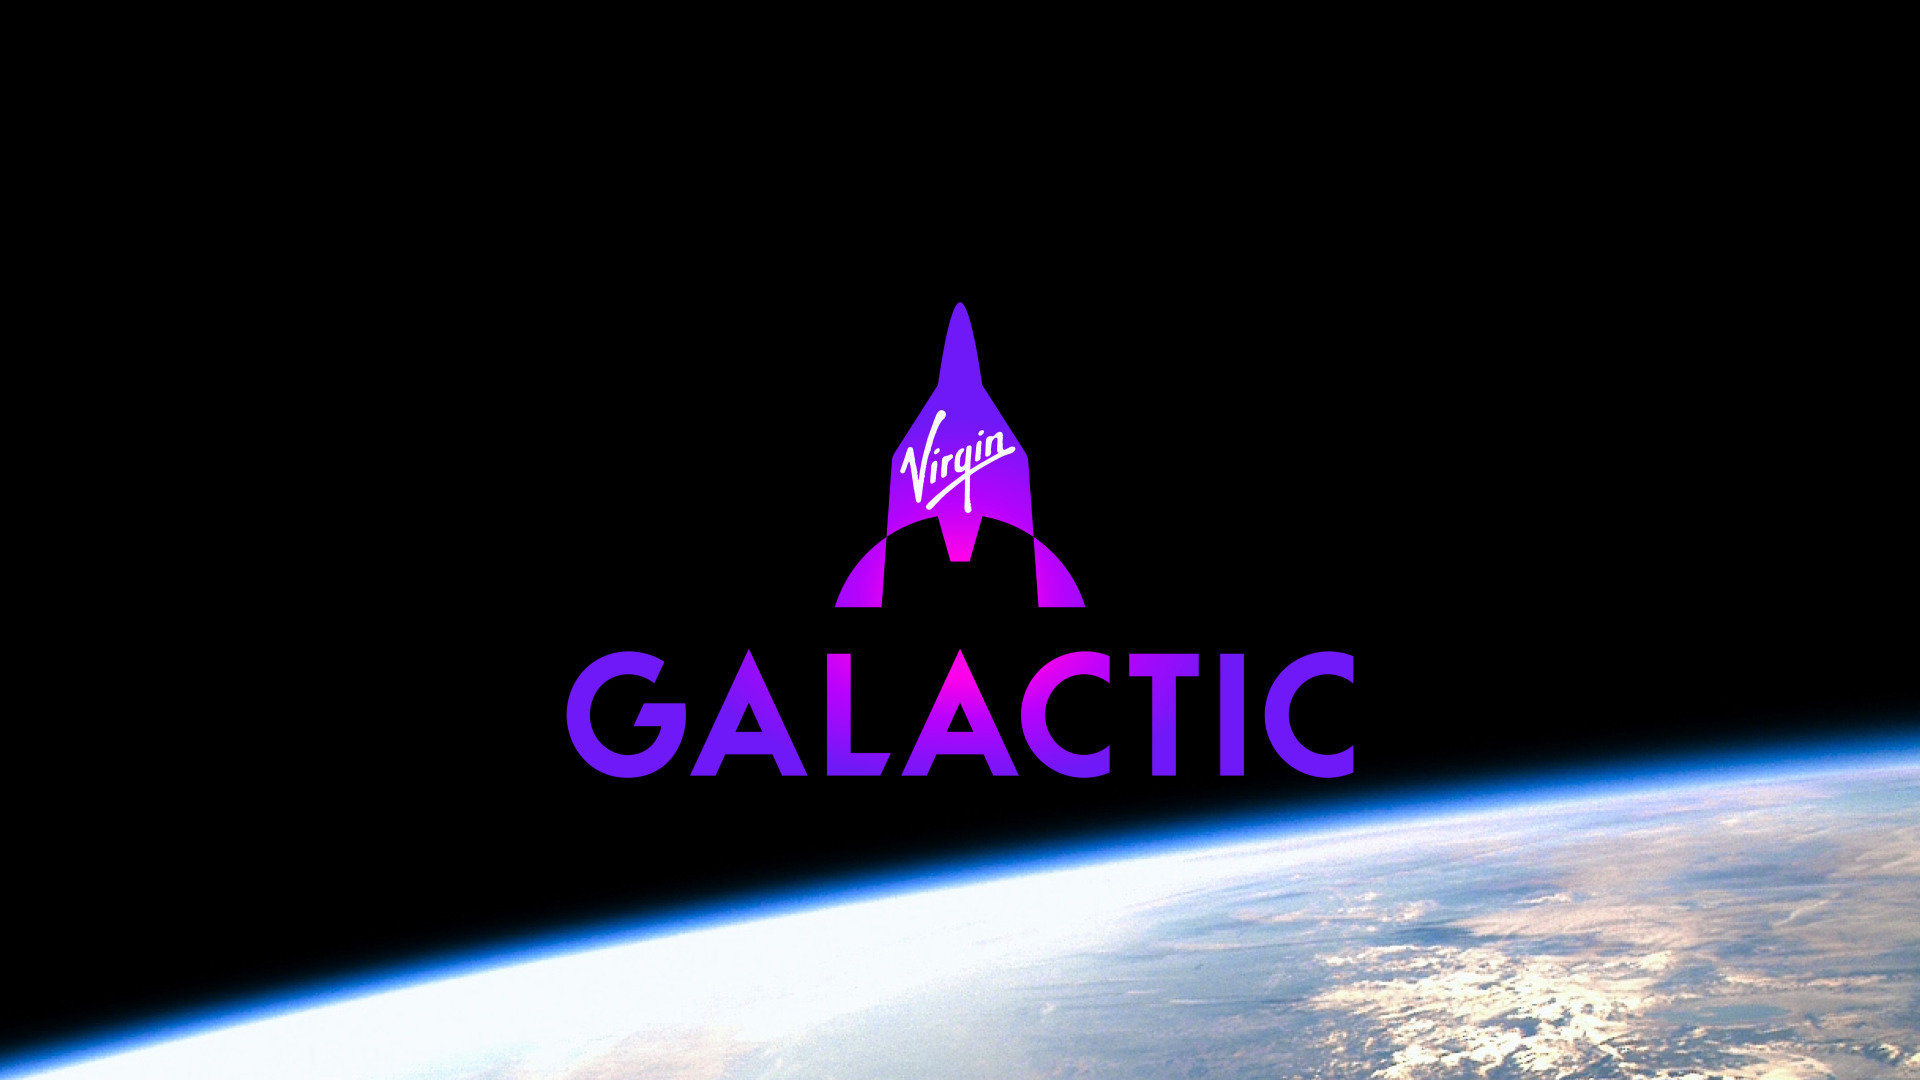 Virgin Galactic กำลังจะปล่อยเที่ยวบินท่องขอบอวกาศในภารกิจ Galactic 03